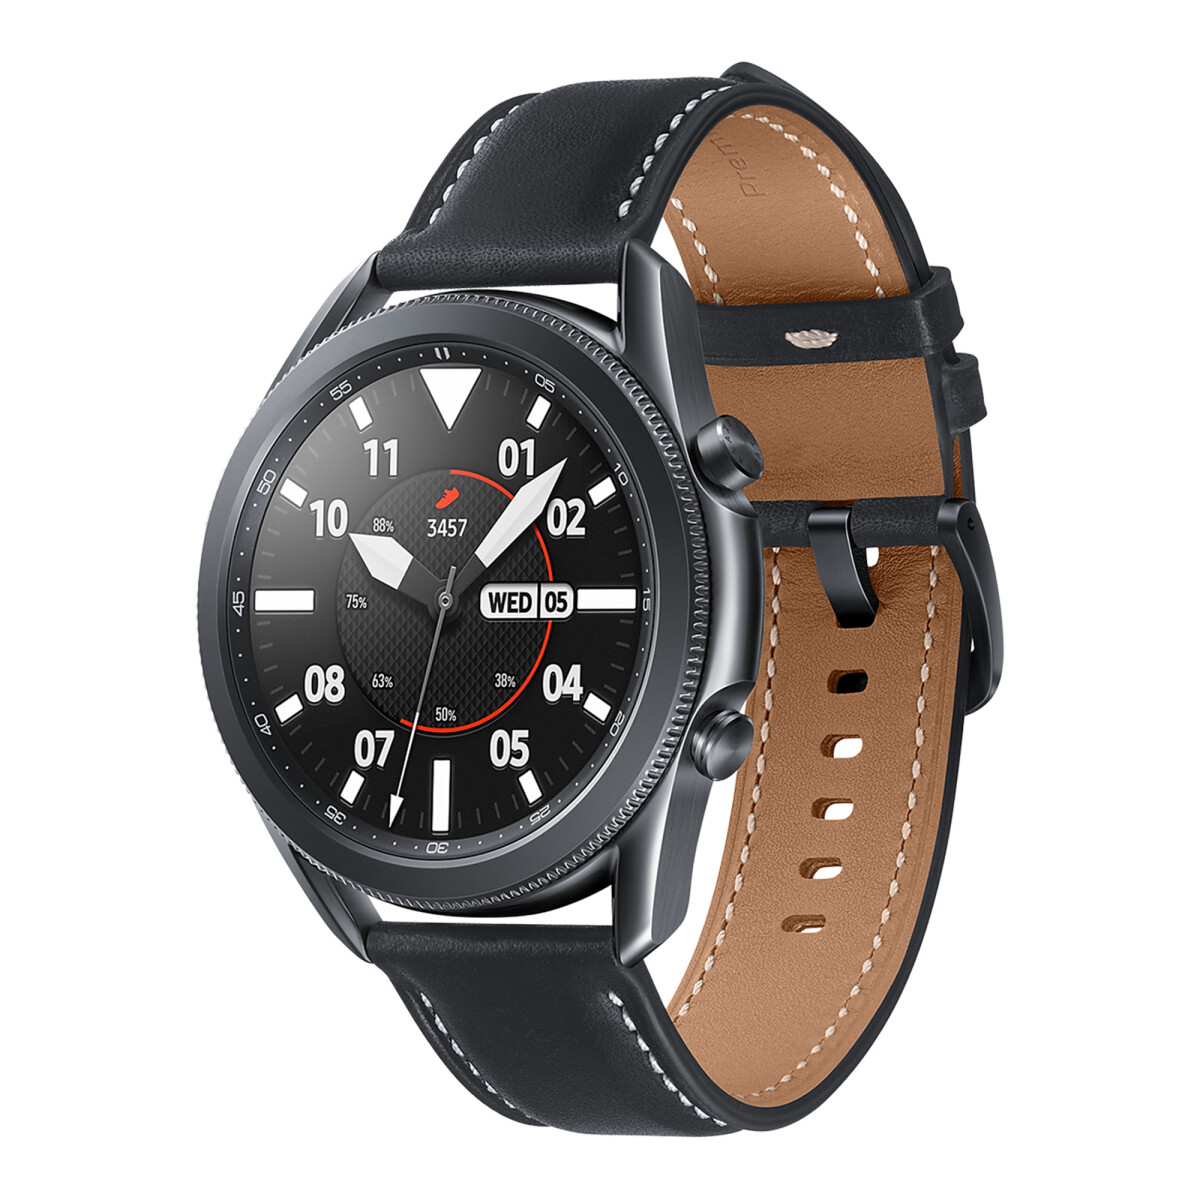 Samsung - Smartwatch Galaxy WATCH3 45 Mm SM-R840 - 5ATM. IP68. MIL-STD-810G. 1,4'' Super Amoled. Ra - 001 